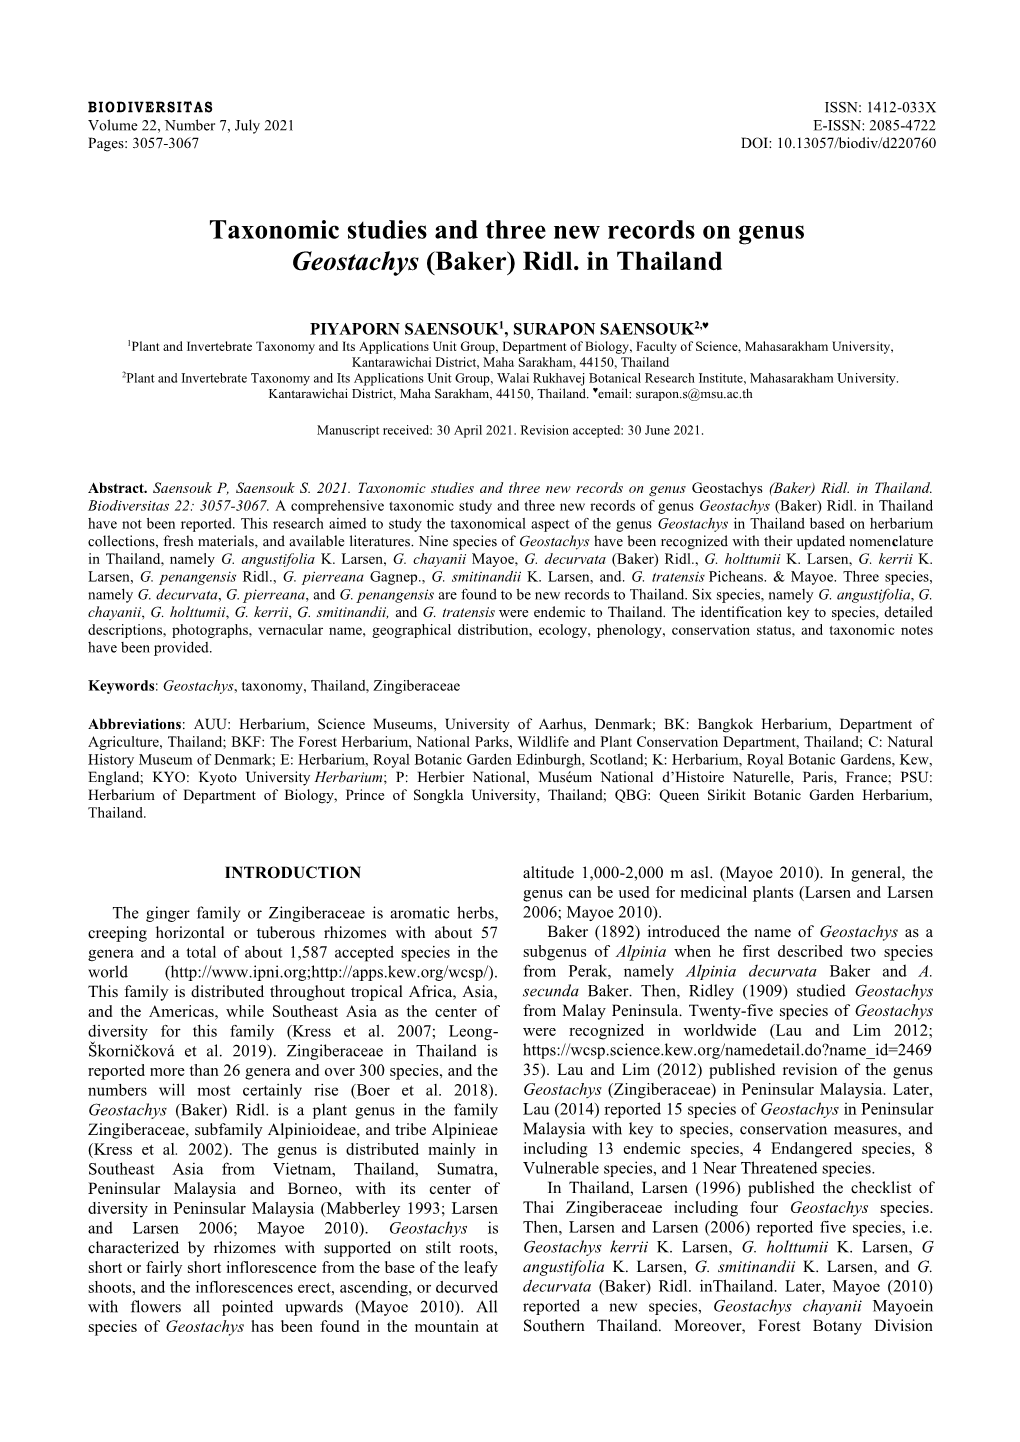 Taxonomic Studies and Three New Records on Genus Geostachys (Baker) Ridl